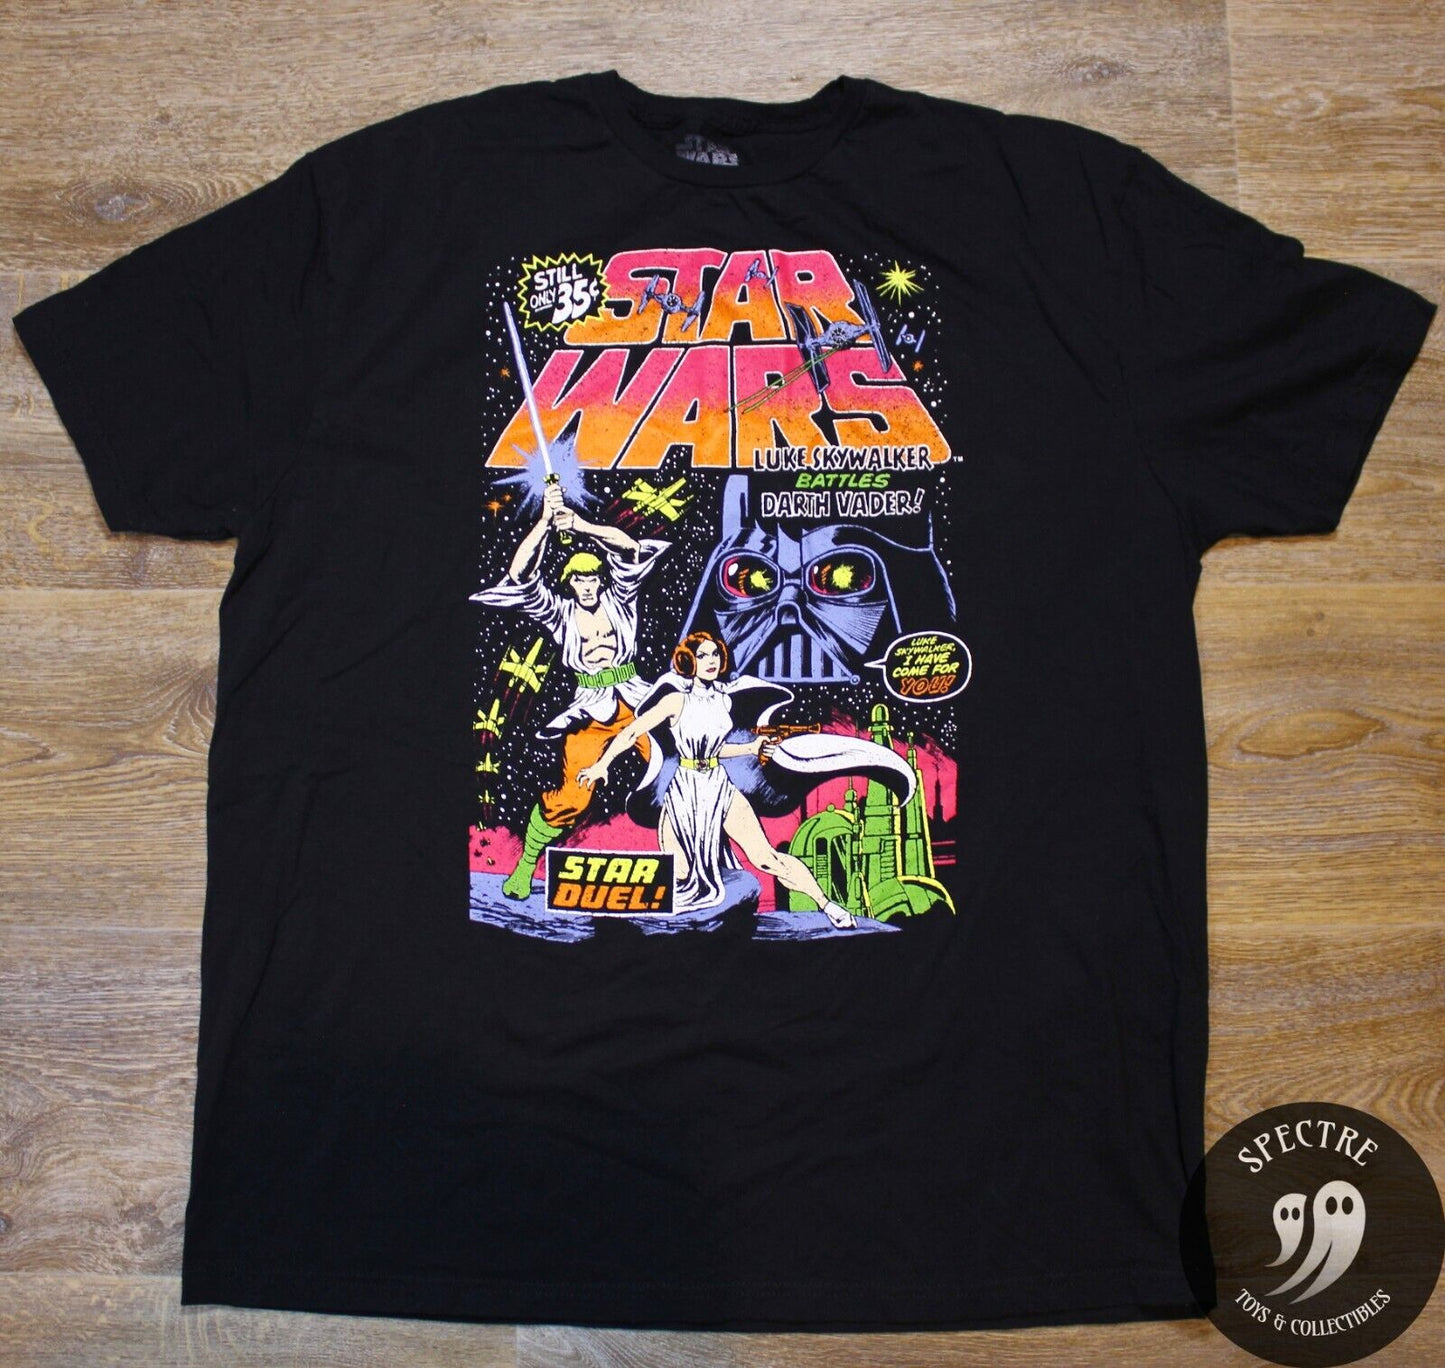 Mad Engine Star Wars Retro Comic Book Cover Graphic Shirt Black - Men's Size XL